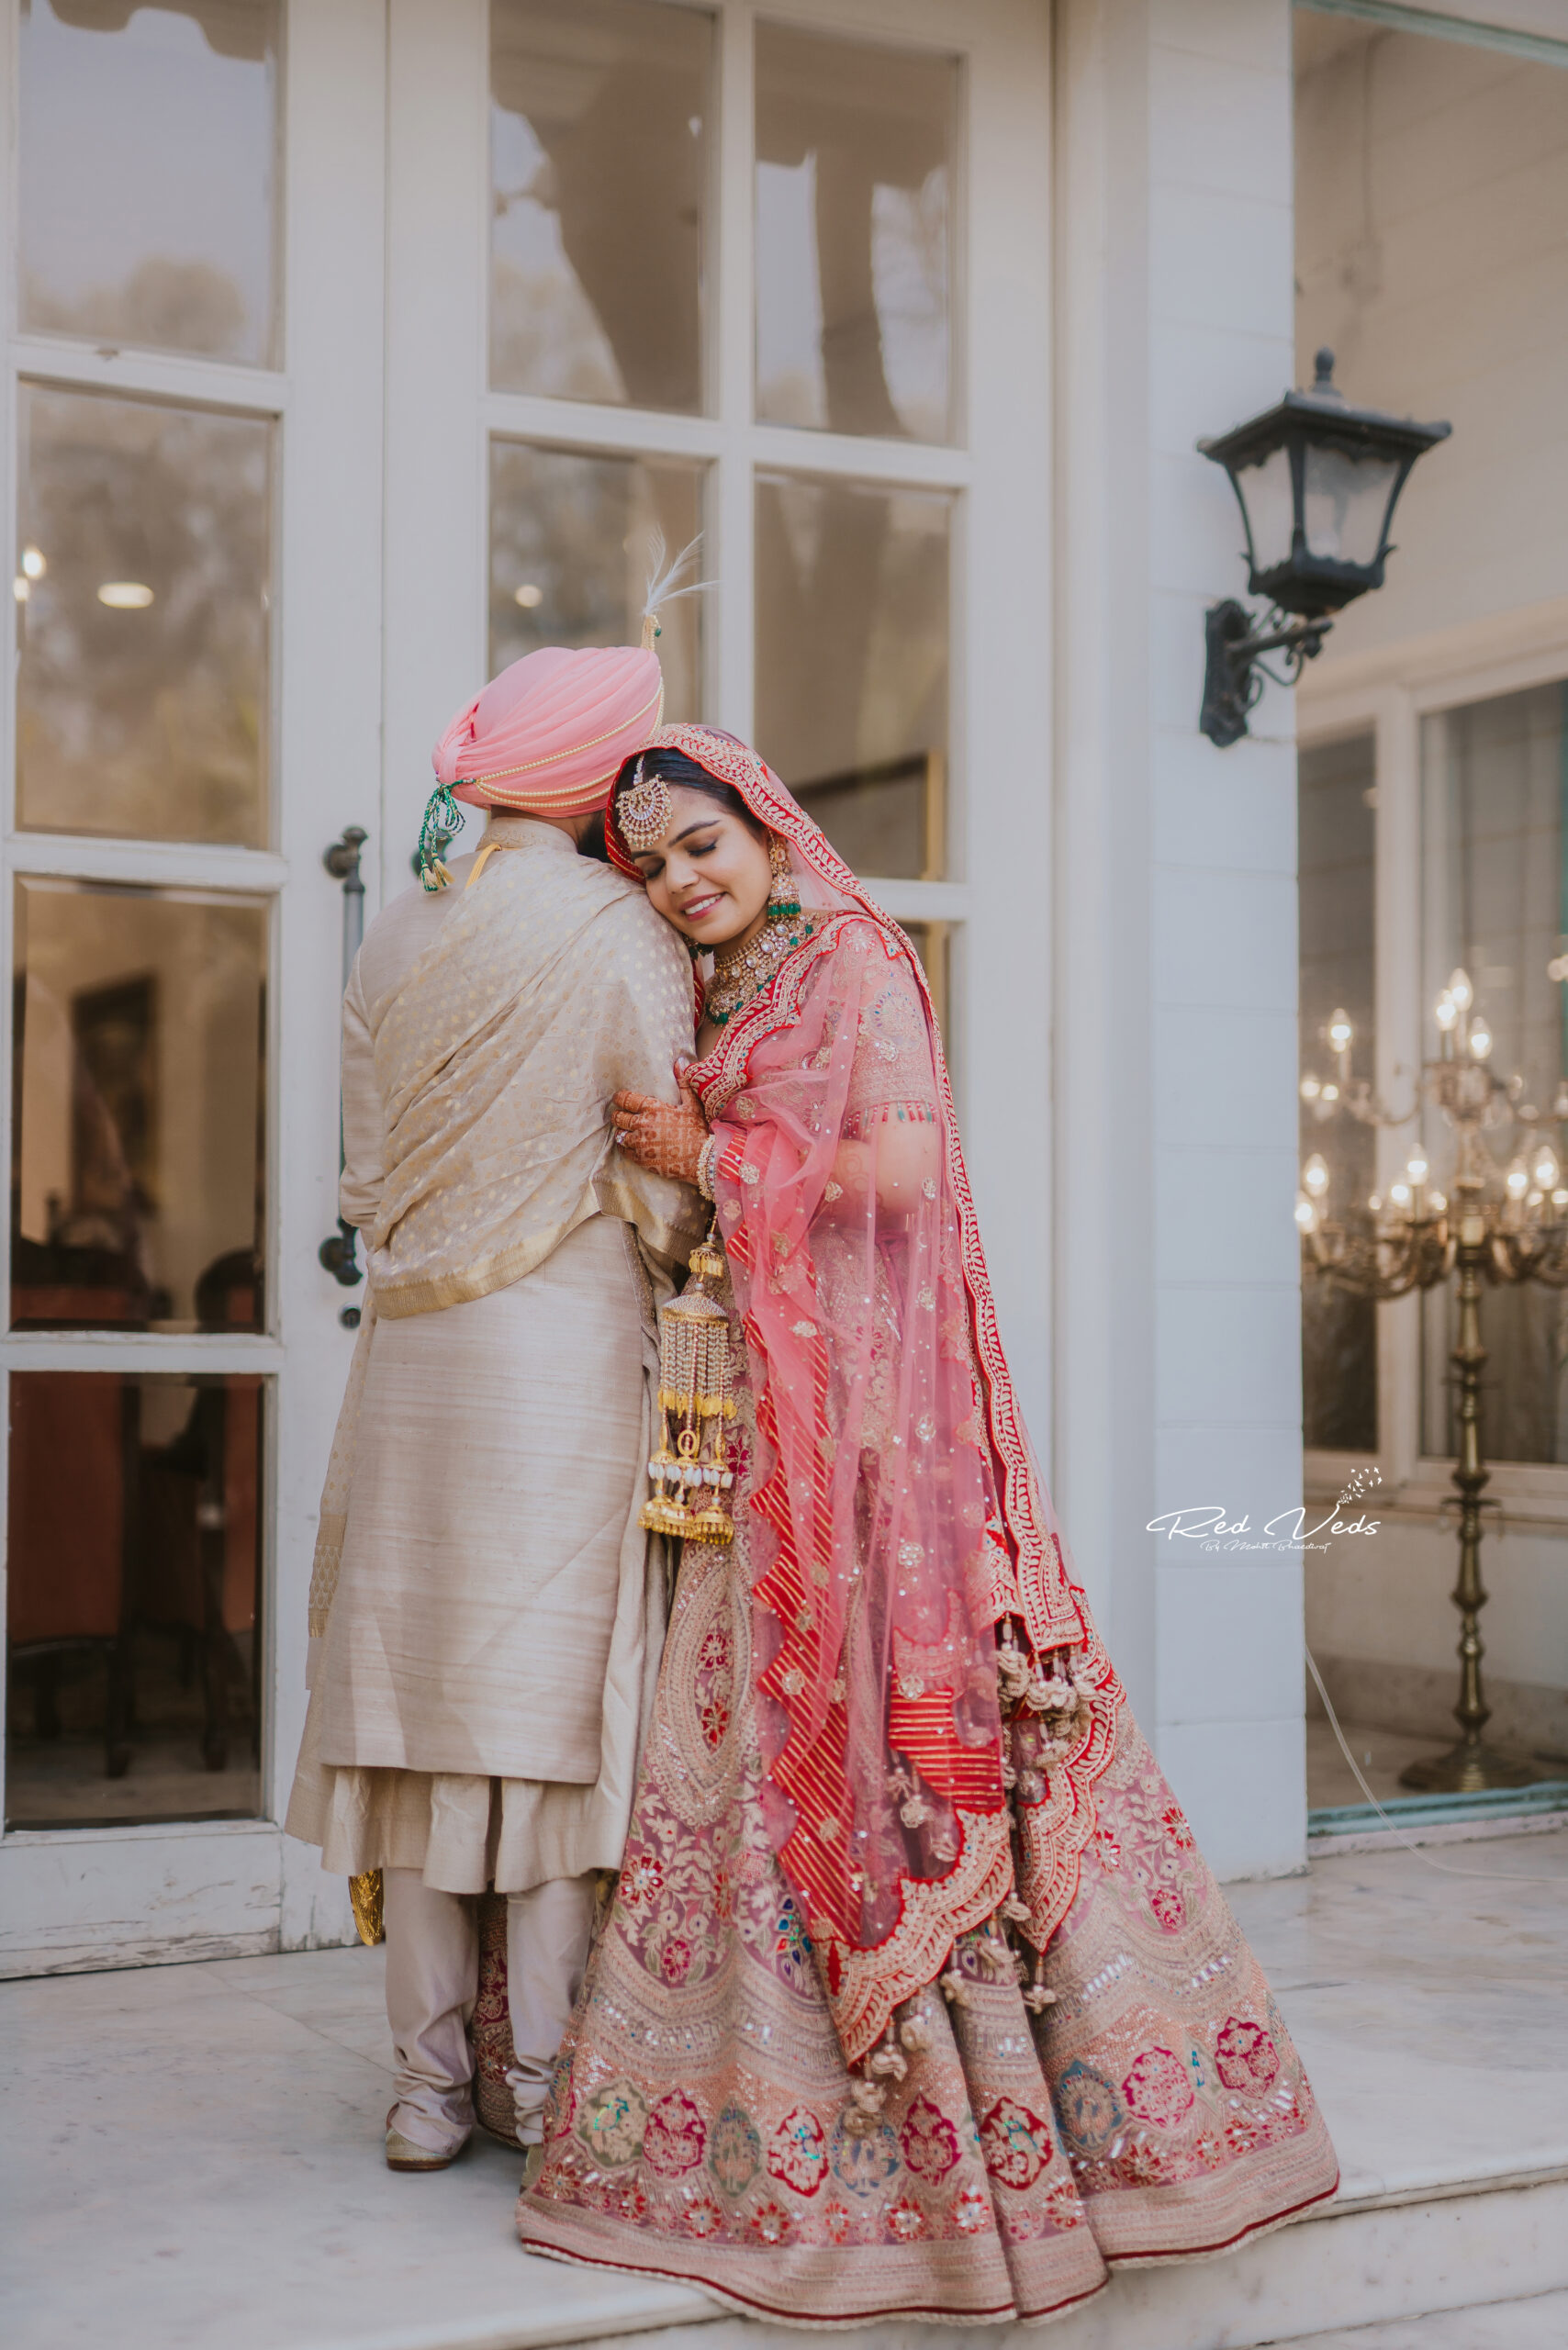 Pin by Vijay Maurya on Vijay Kumar Maurya | Indian wedding photography poses,  Wedding couple poses photography, Indian bride photography poses